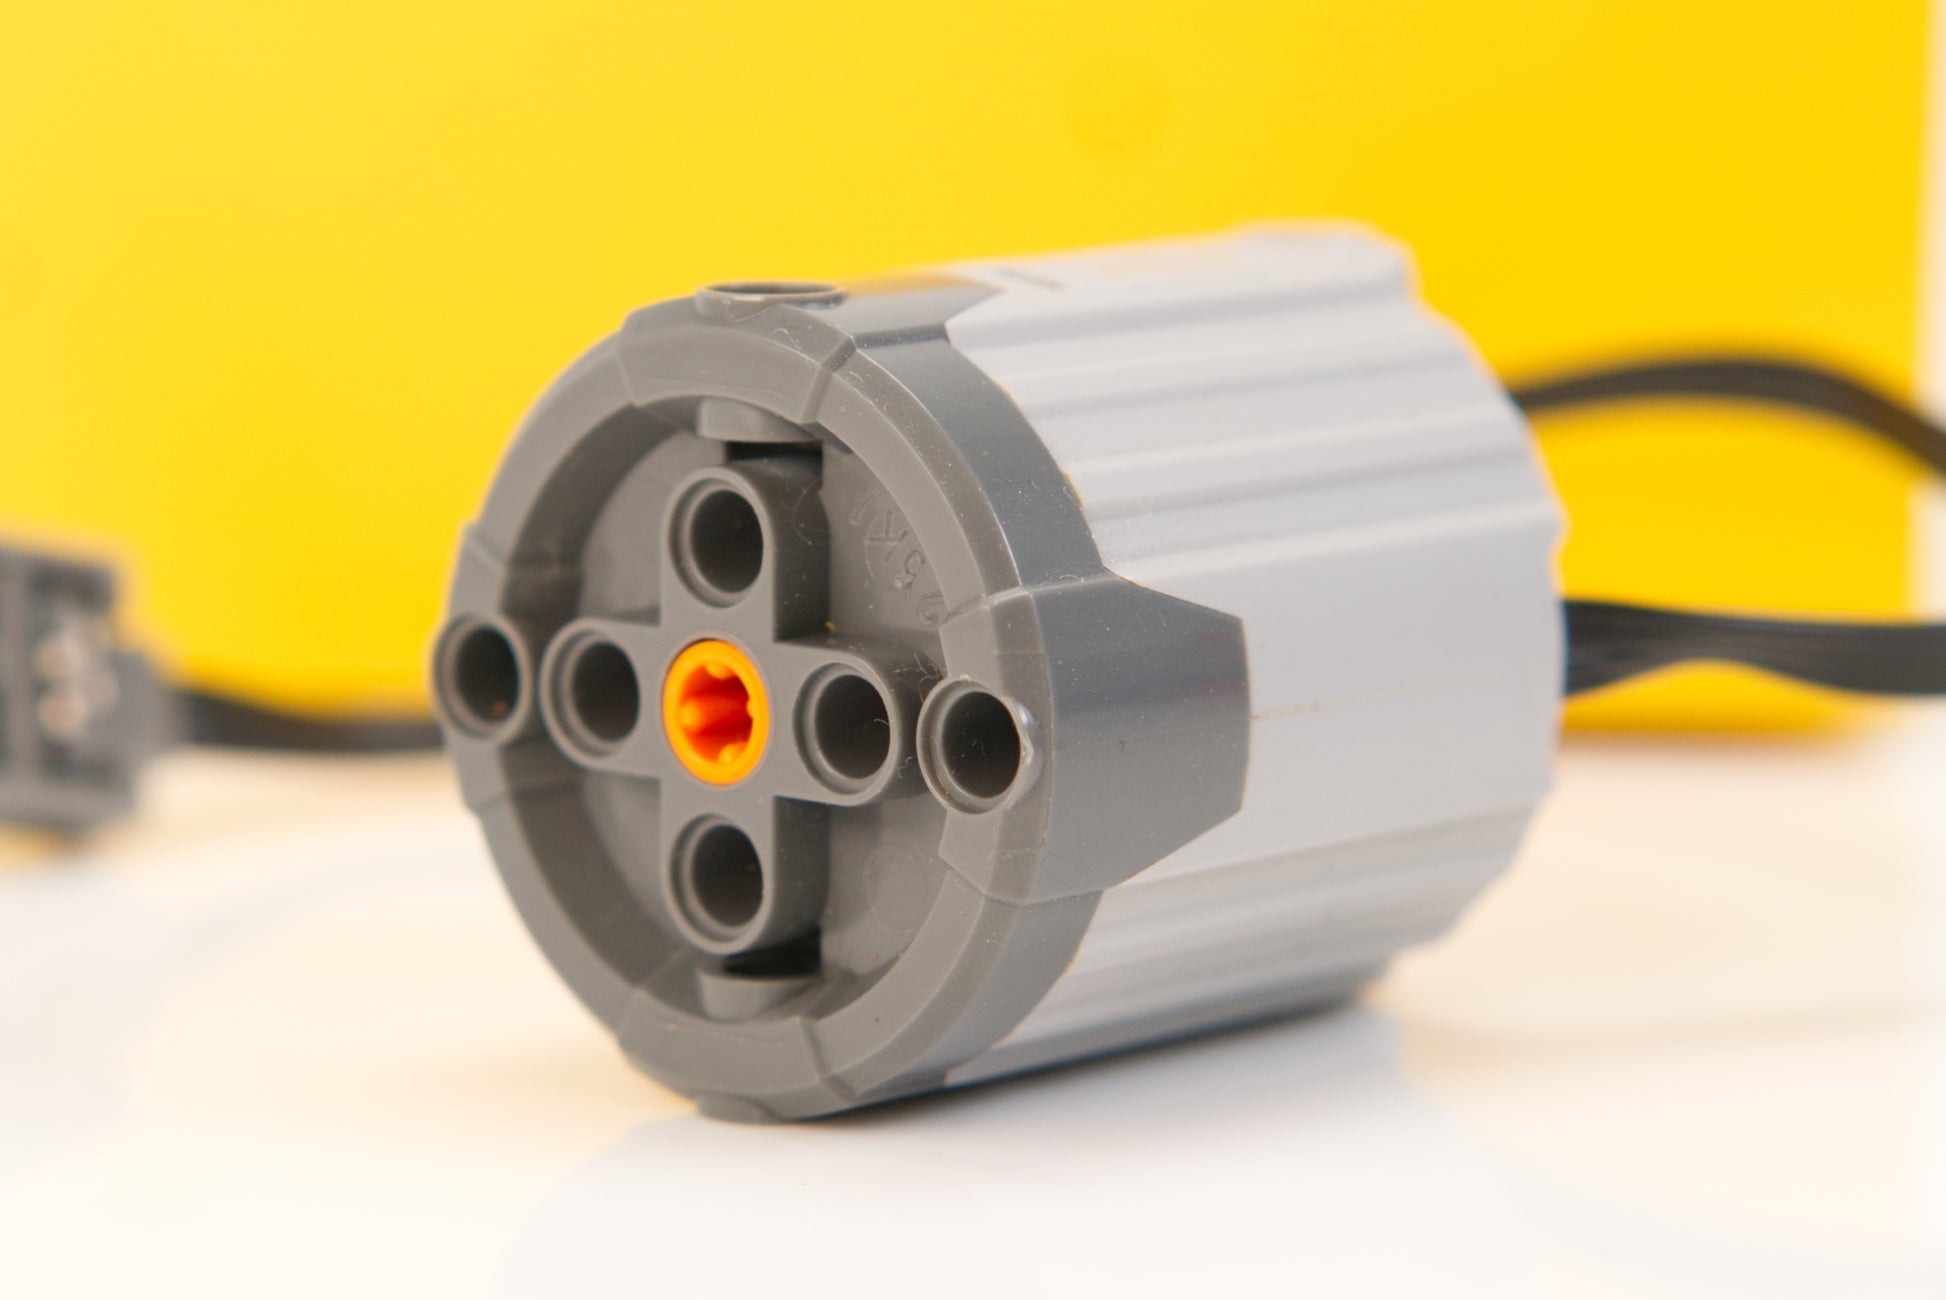 Lego® Motor Alternatives: The Big Overview